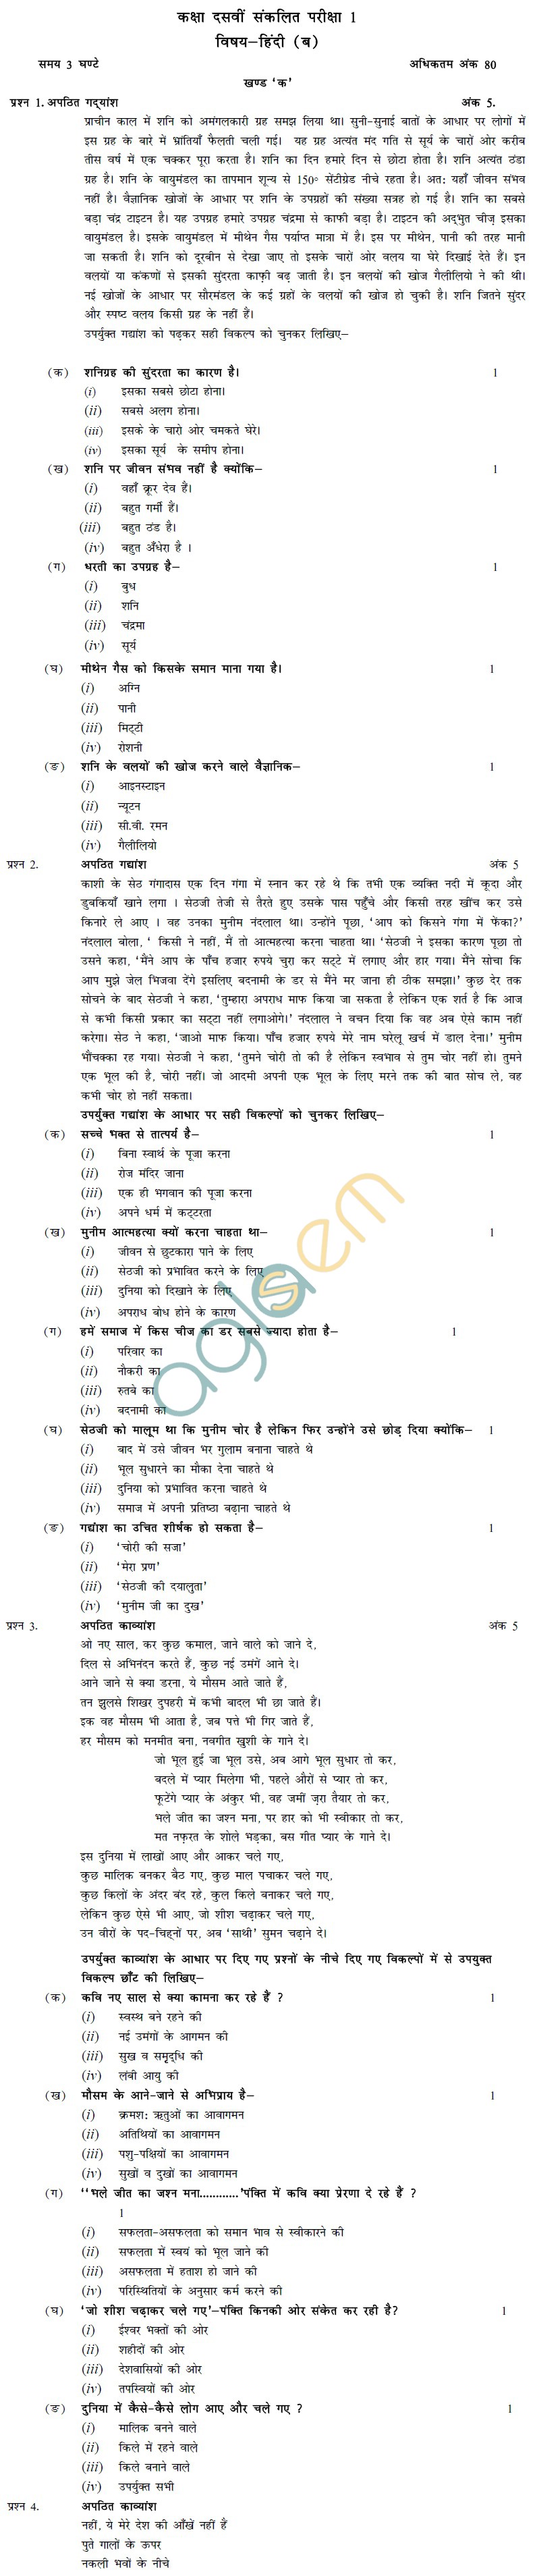 CBSE Board Exam 2013 Sample Papers (SA1) Class X - Hindi B